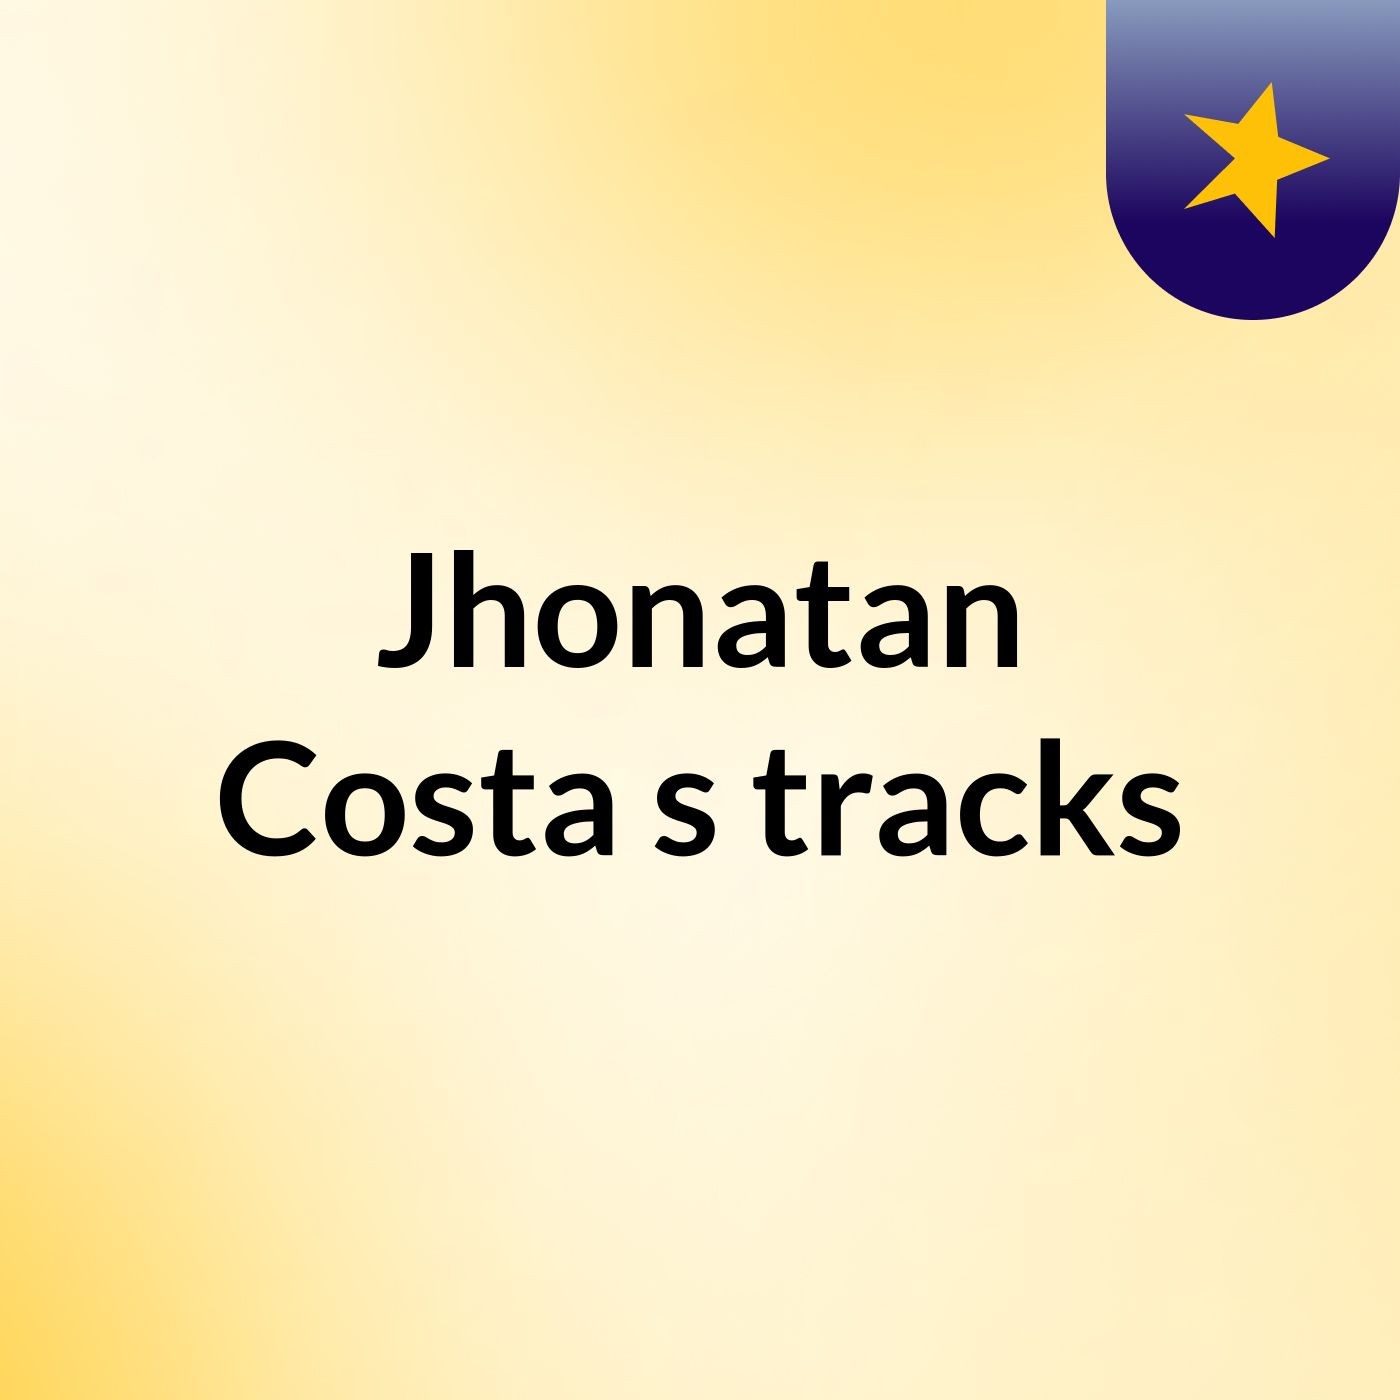 Jhonatan Costa's tracks